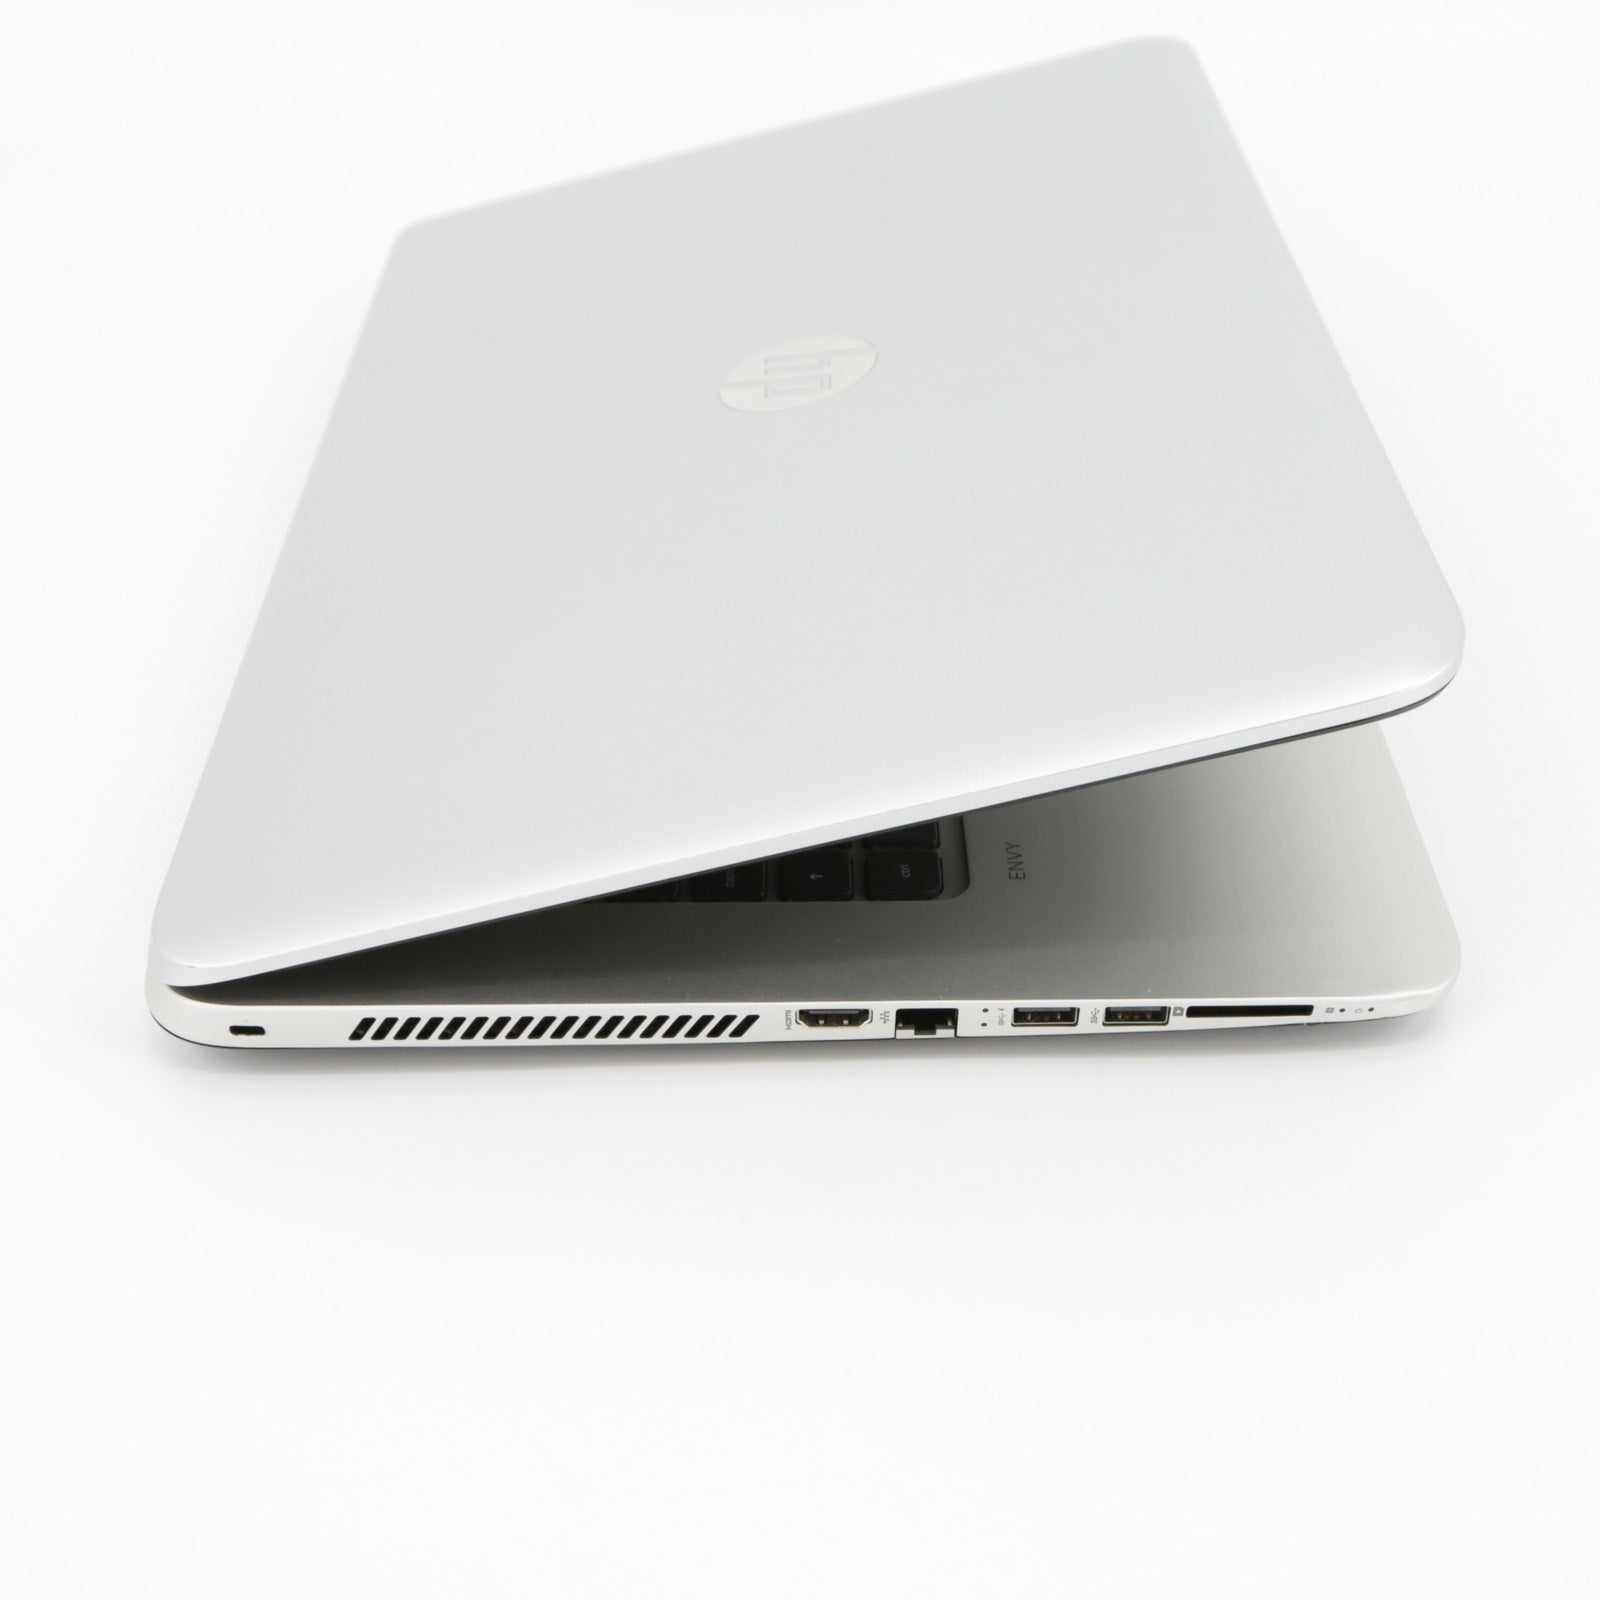 HP Envy 17 Laptop: Core i7-4700MQ, 12GB RAM, 480GB SSD, NVIDIA GeForce,  Warranty